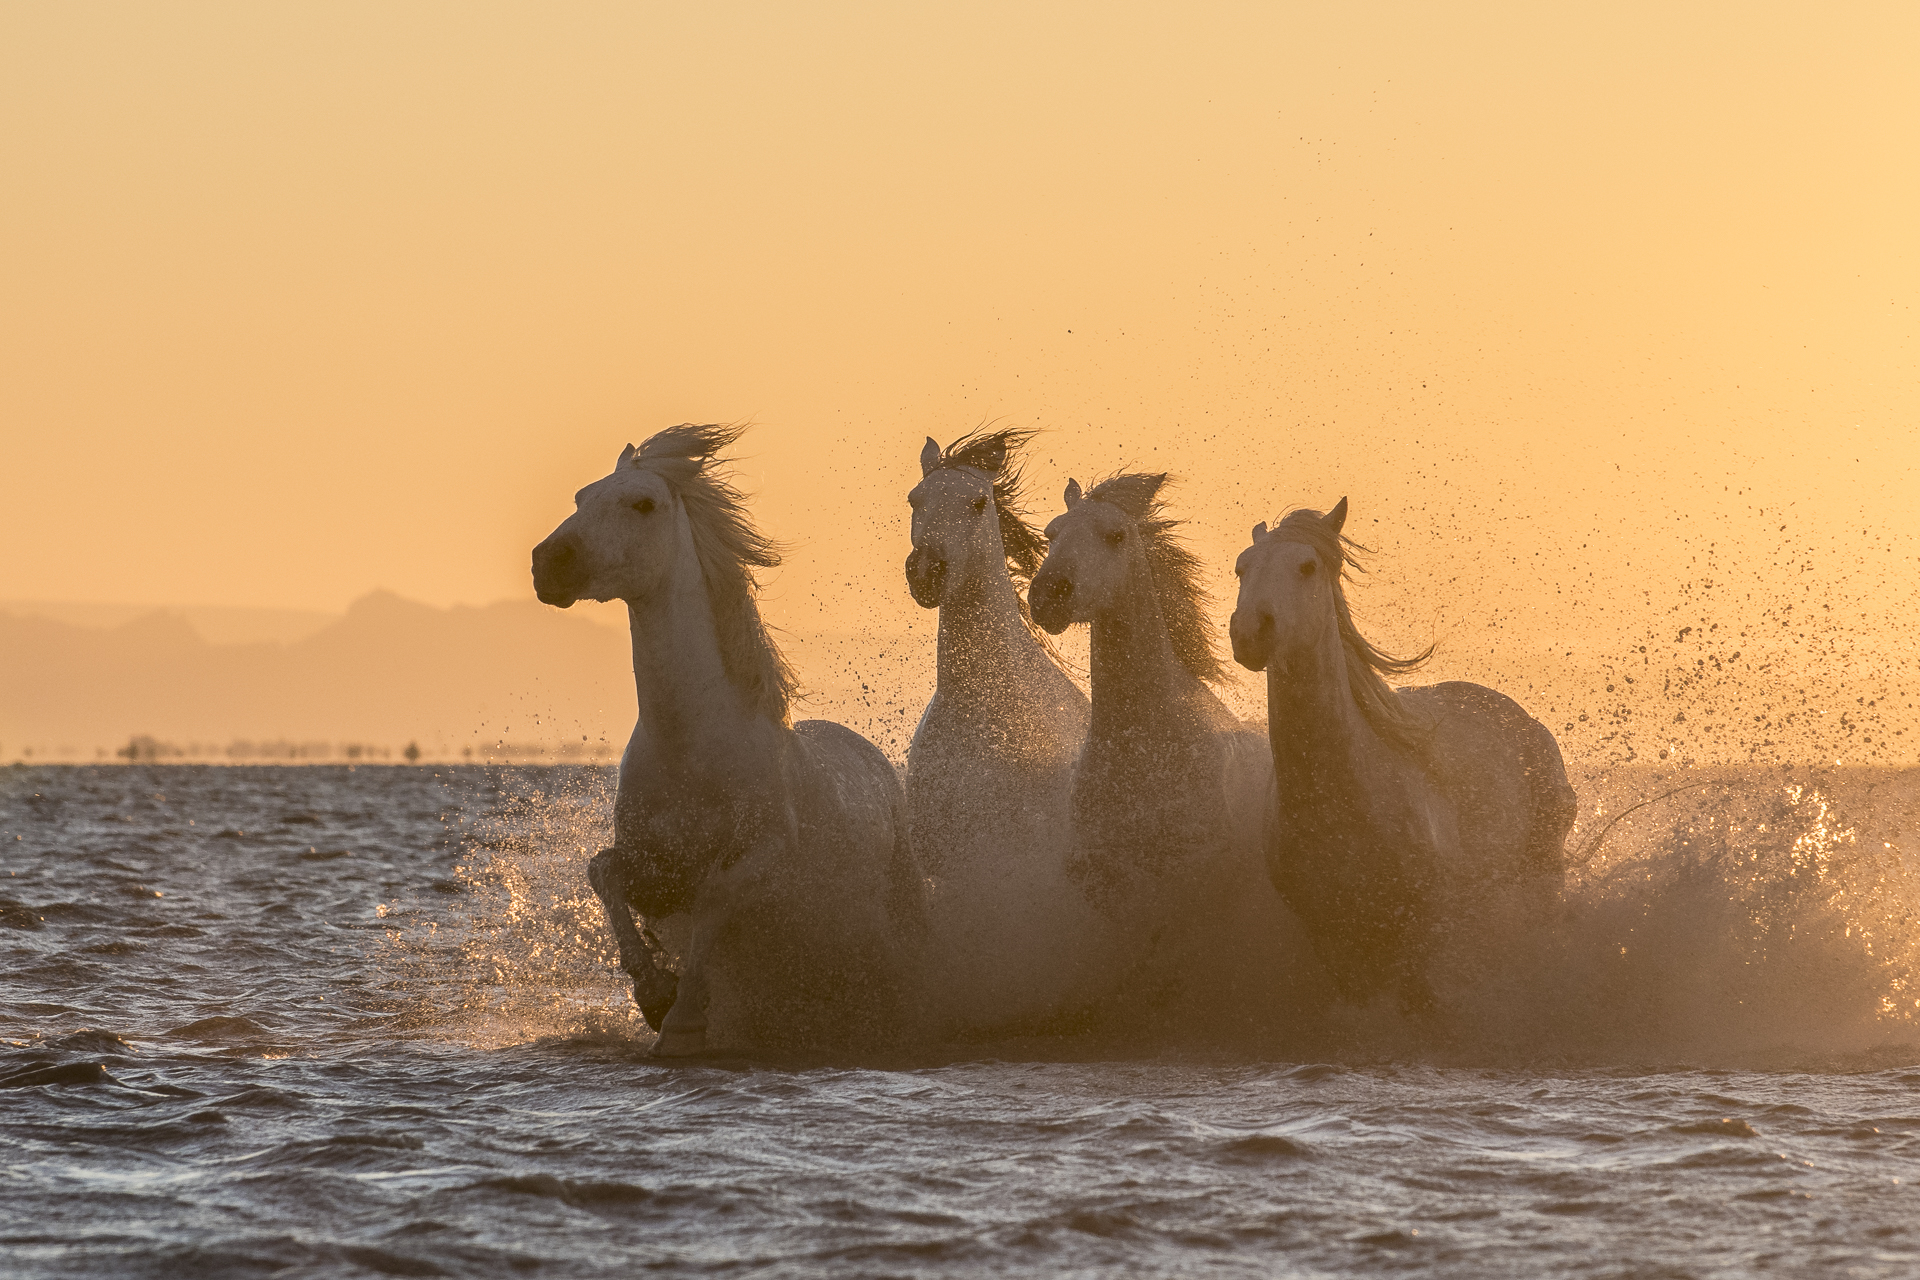 Horses running in Mediterranean surf at sunset. Parc naturel régional de Camargue. France.